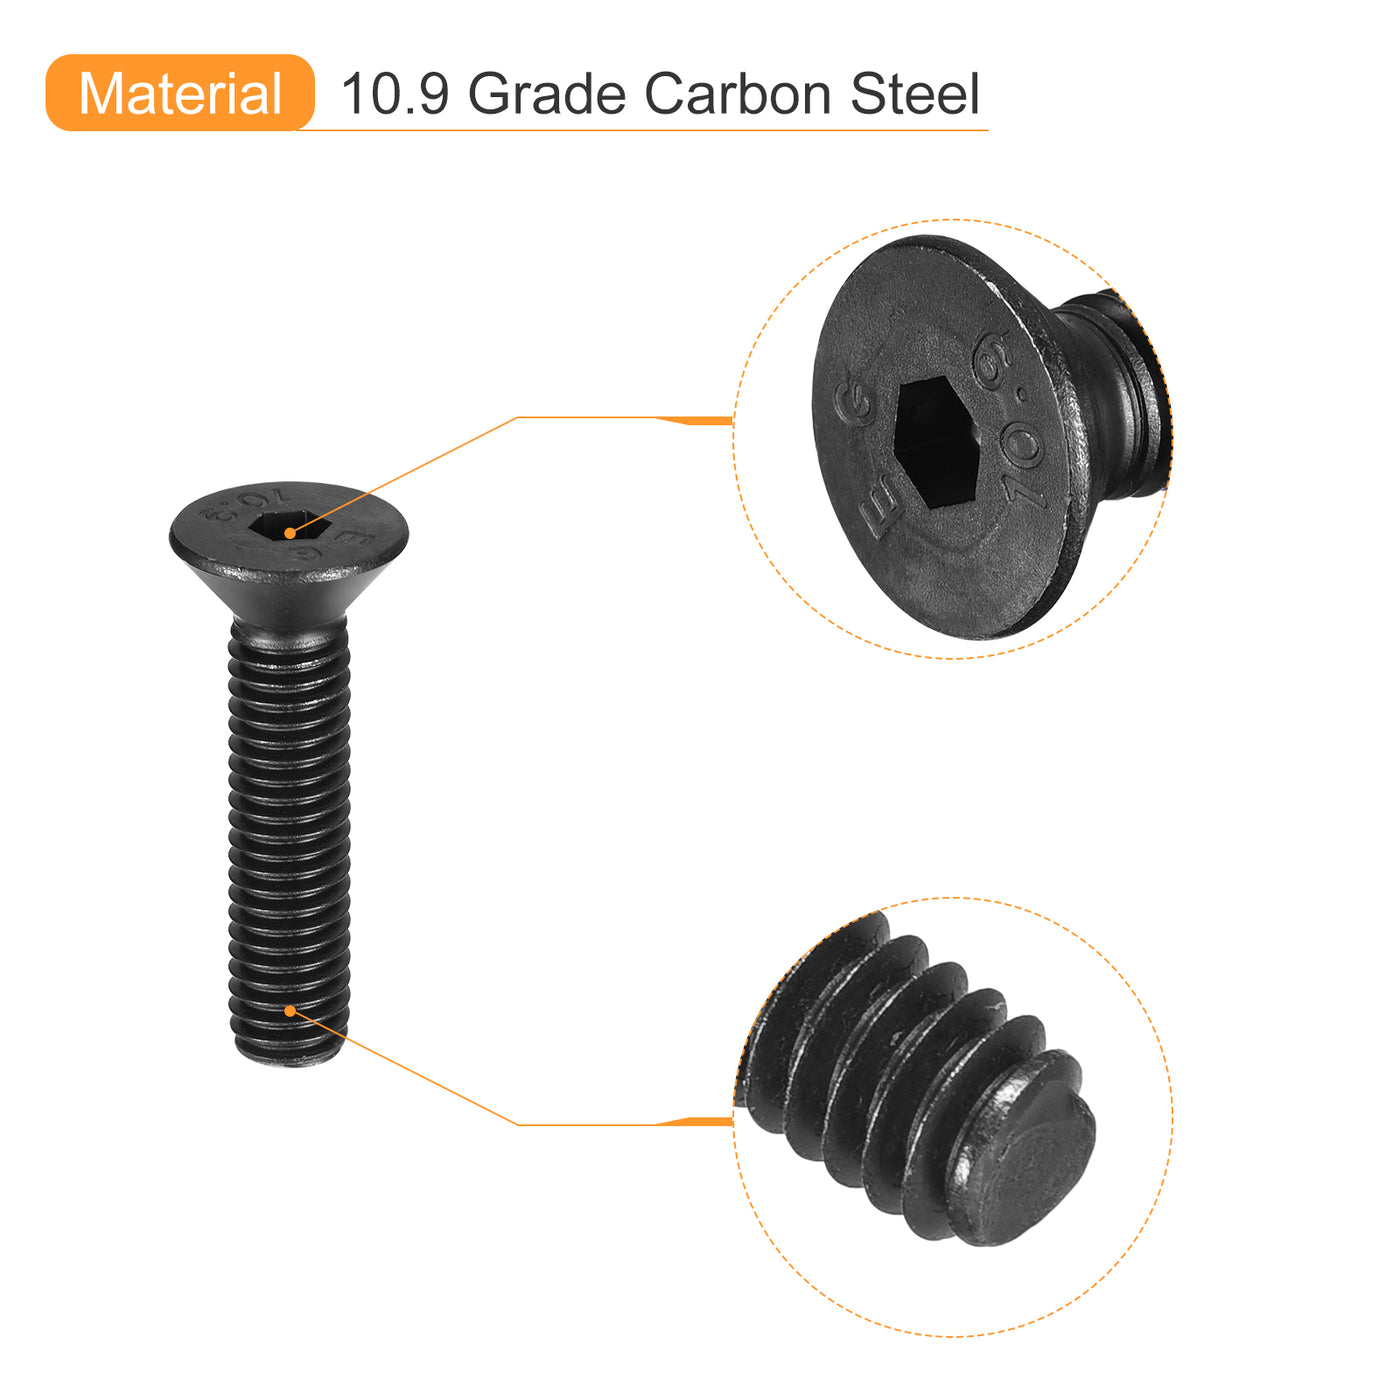 uxcell Uxcell 3/8-16x1-3/4" Flat Head Socket Cap Screws, 10.9 Grade Carbon Steel, 10PCS